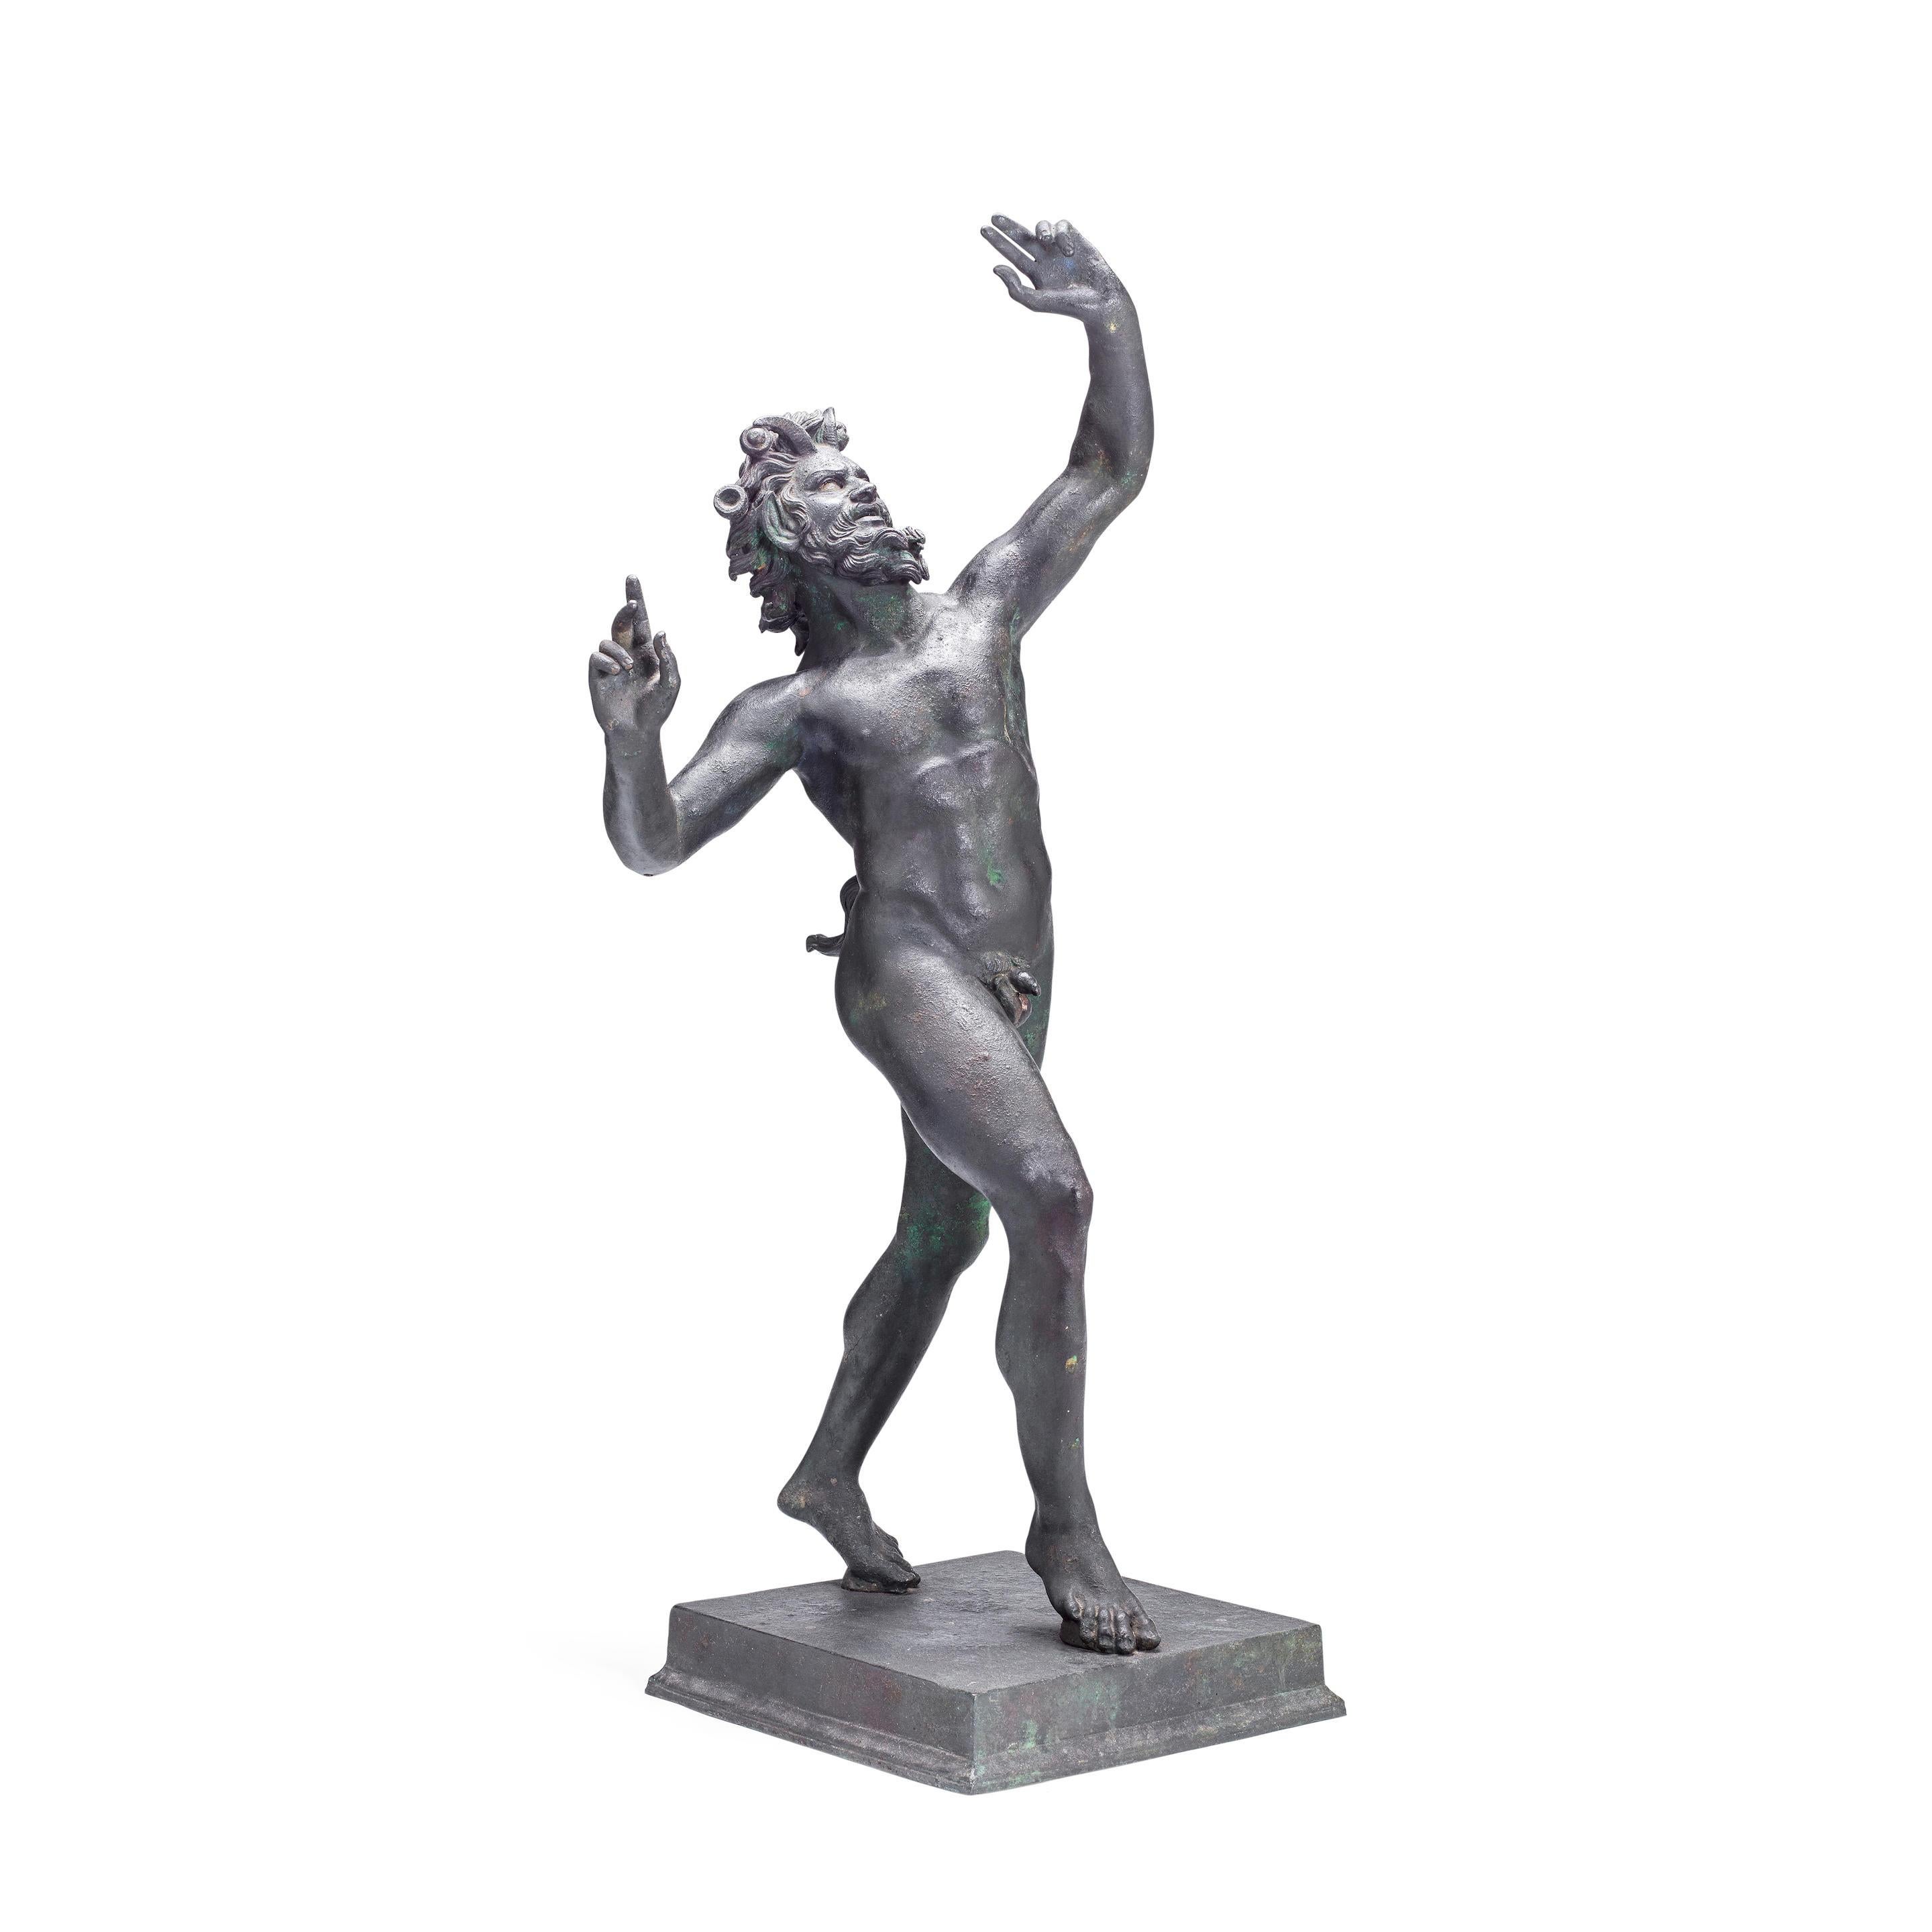 Unknown Figurative Sculpture - Late 19th century Grand Tour bronze of the Dancing Faun